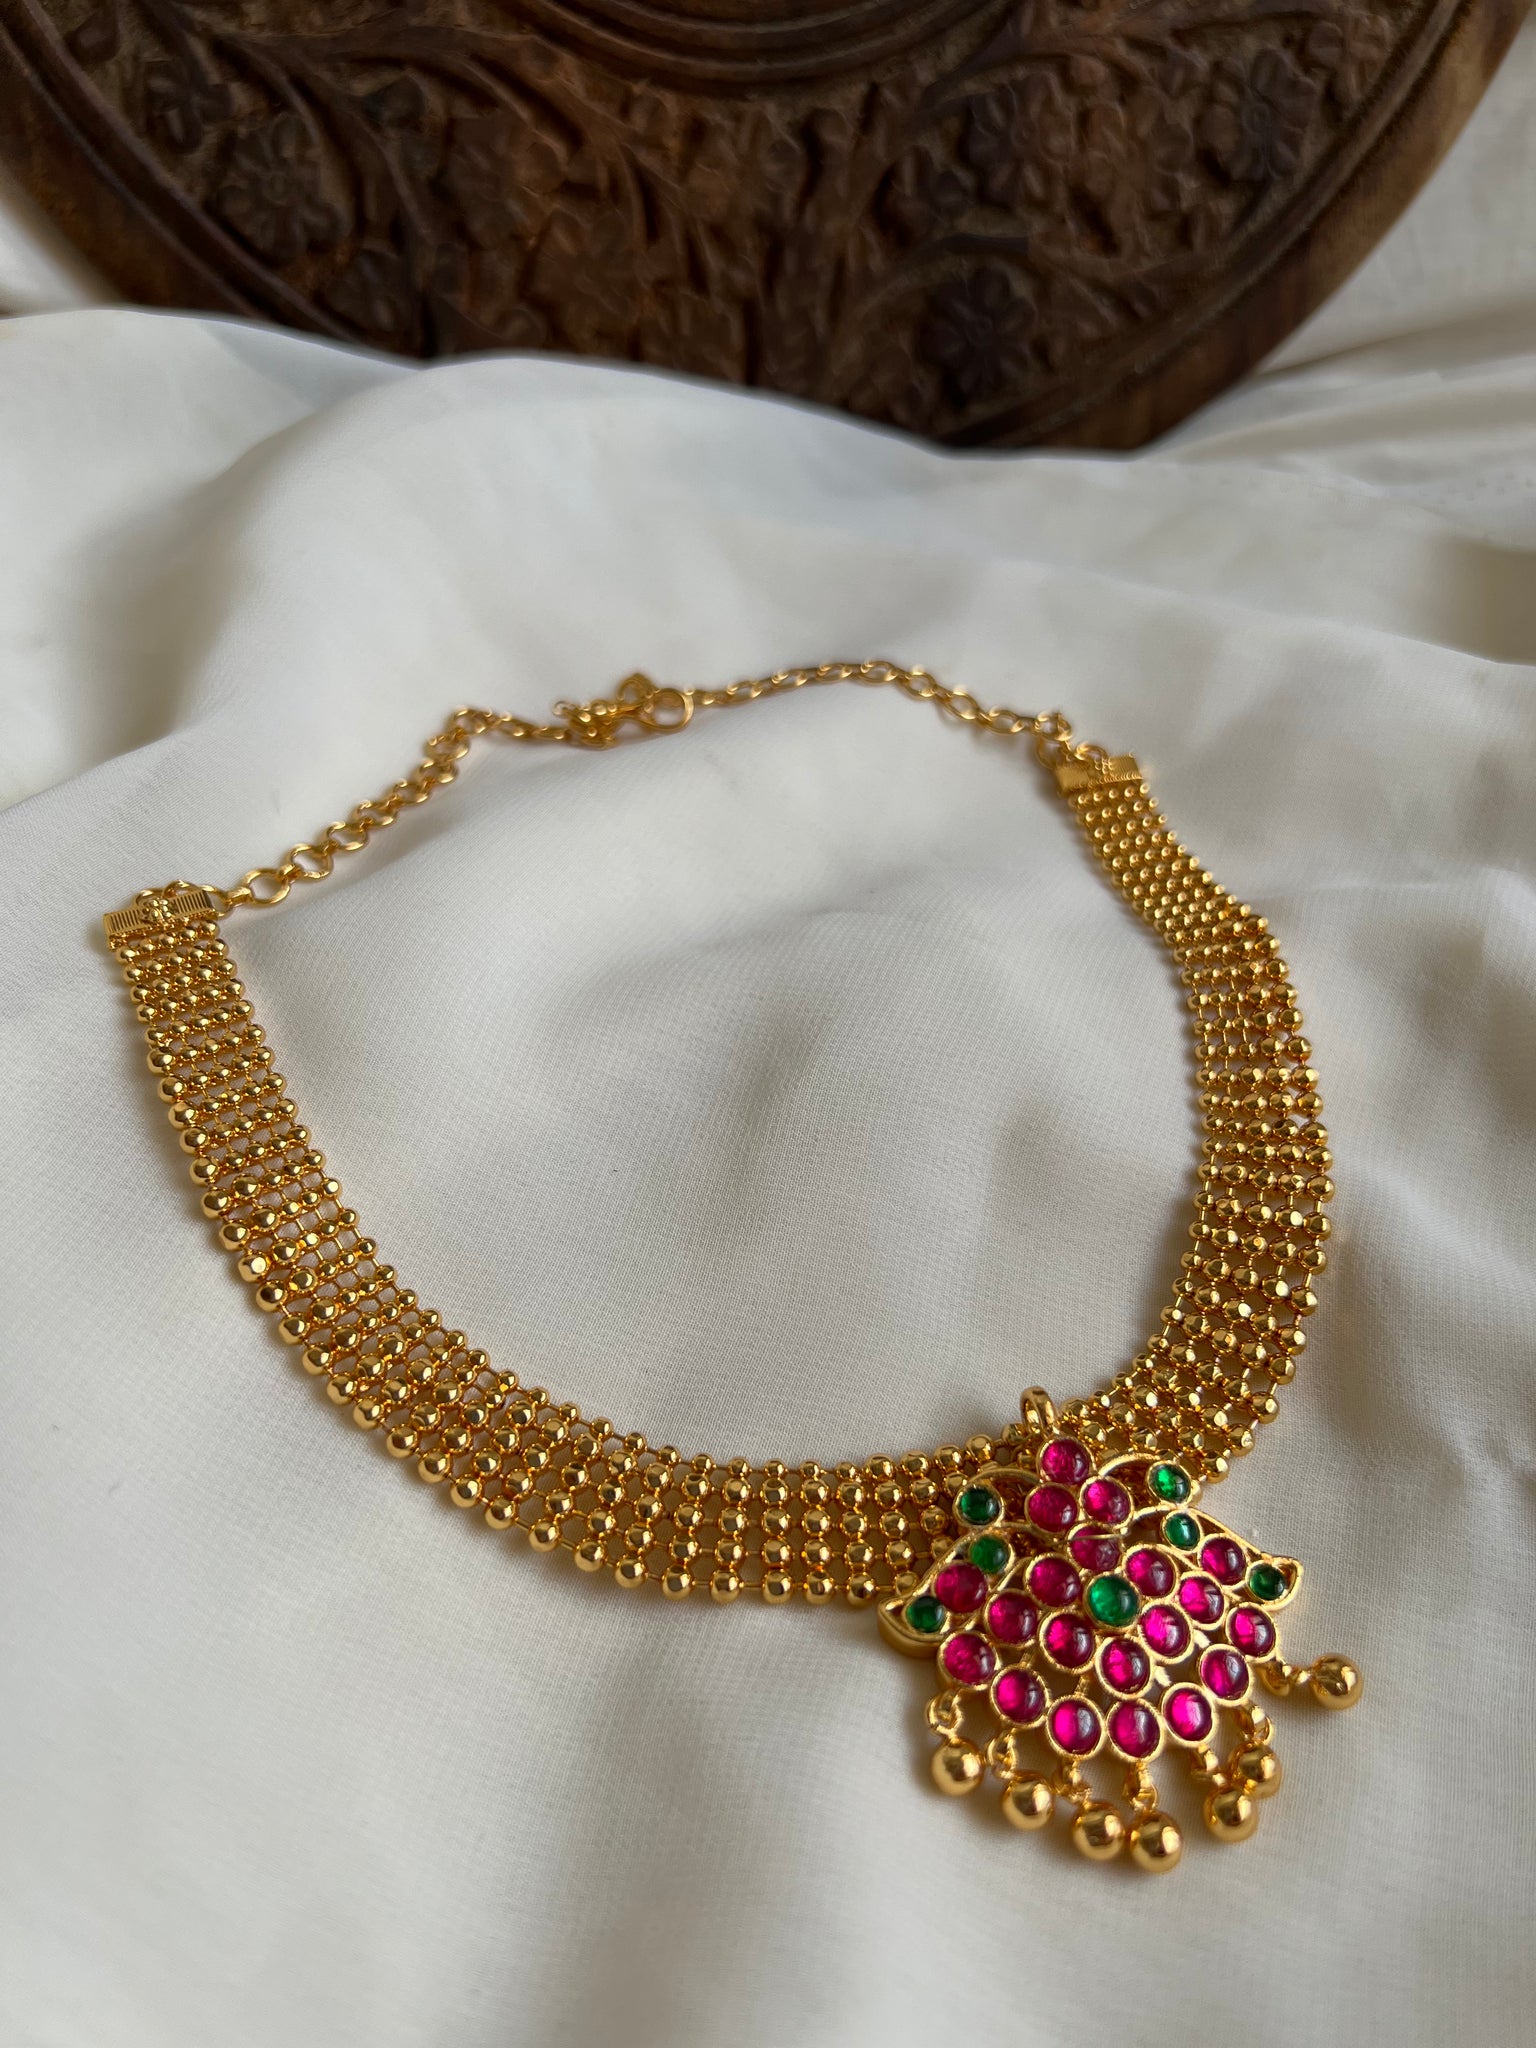 Kerala style pendant golden necklace - A